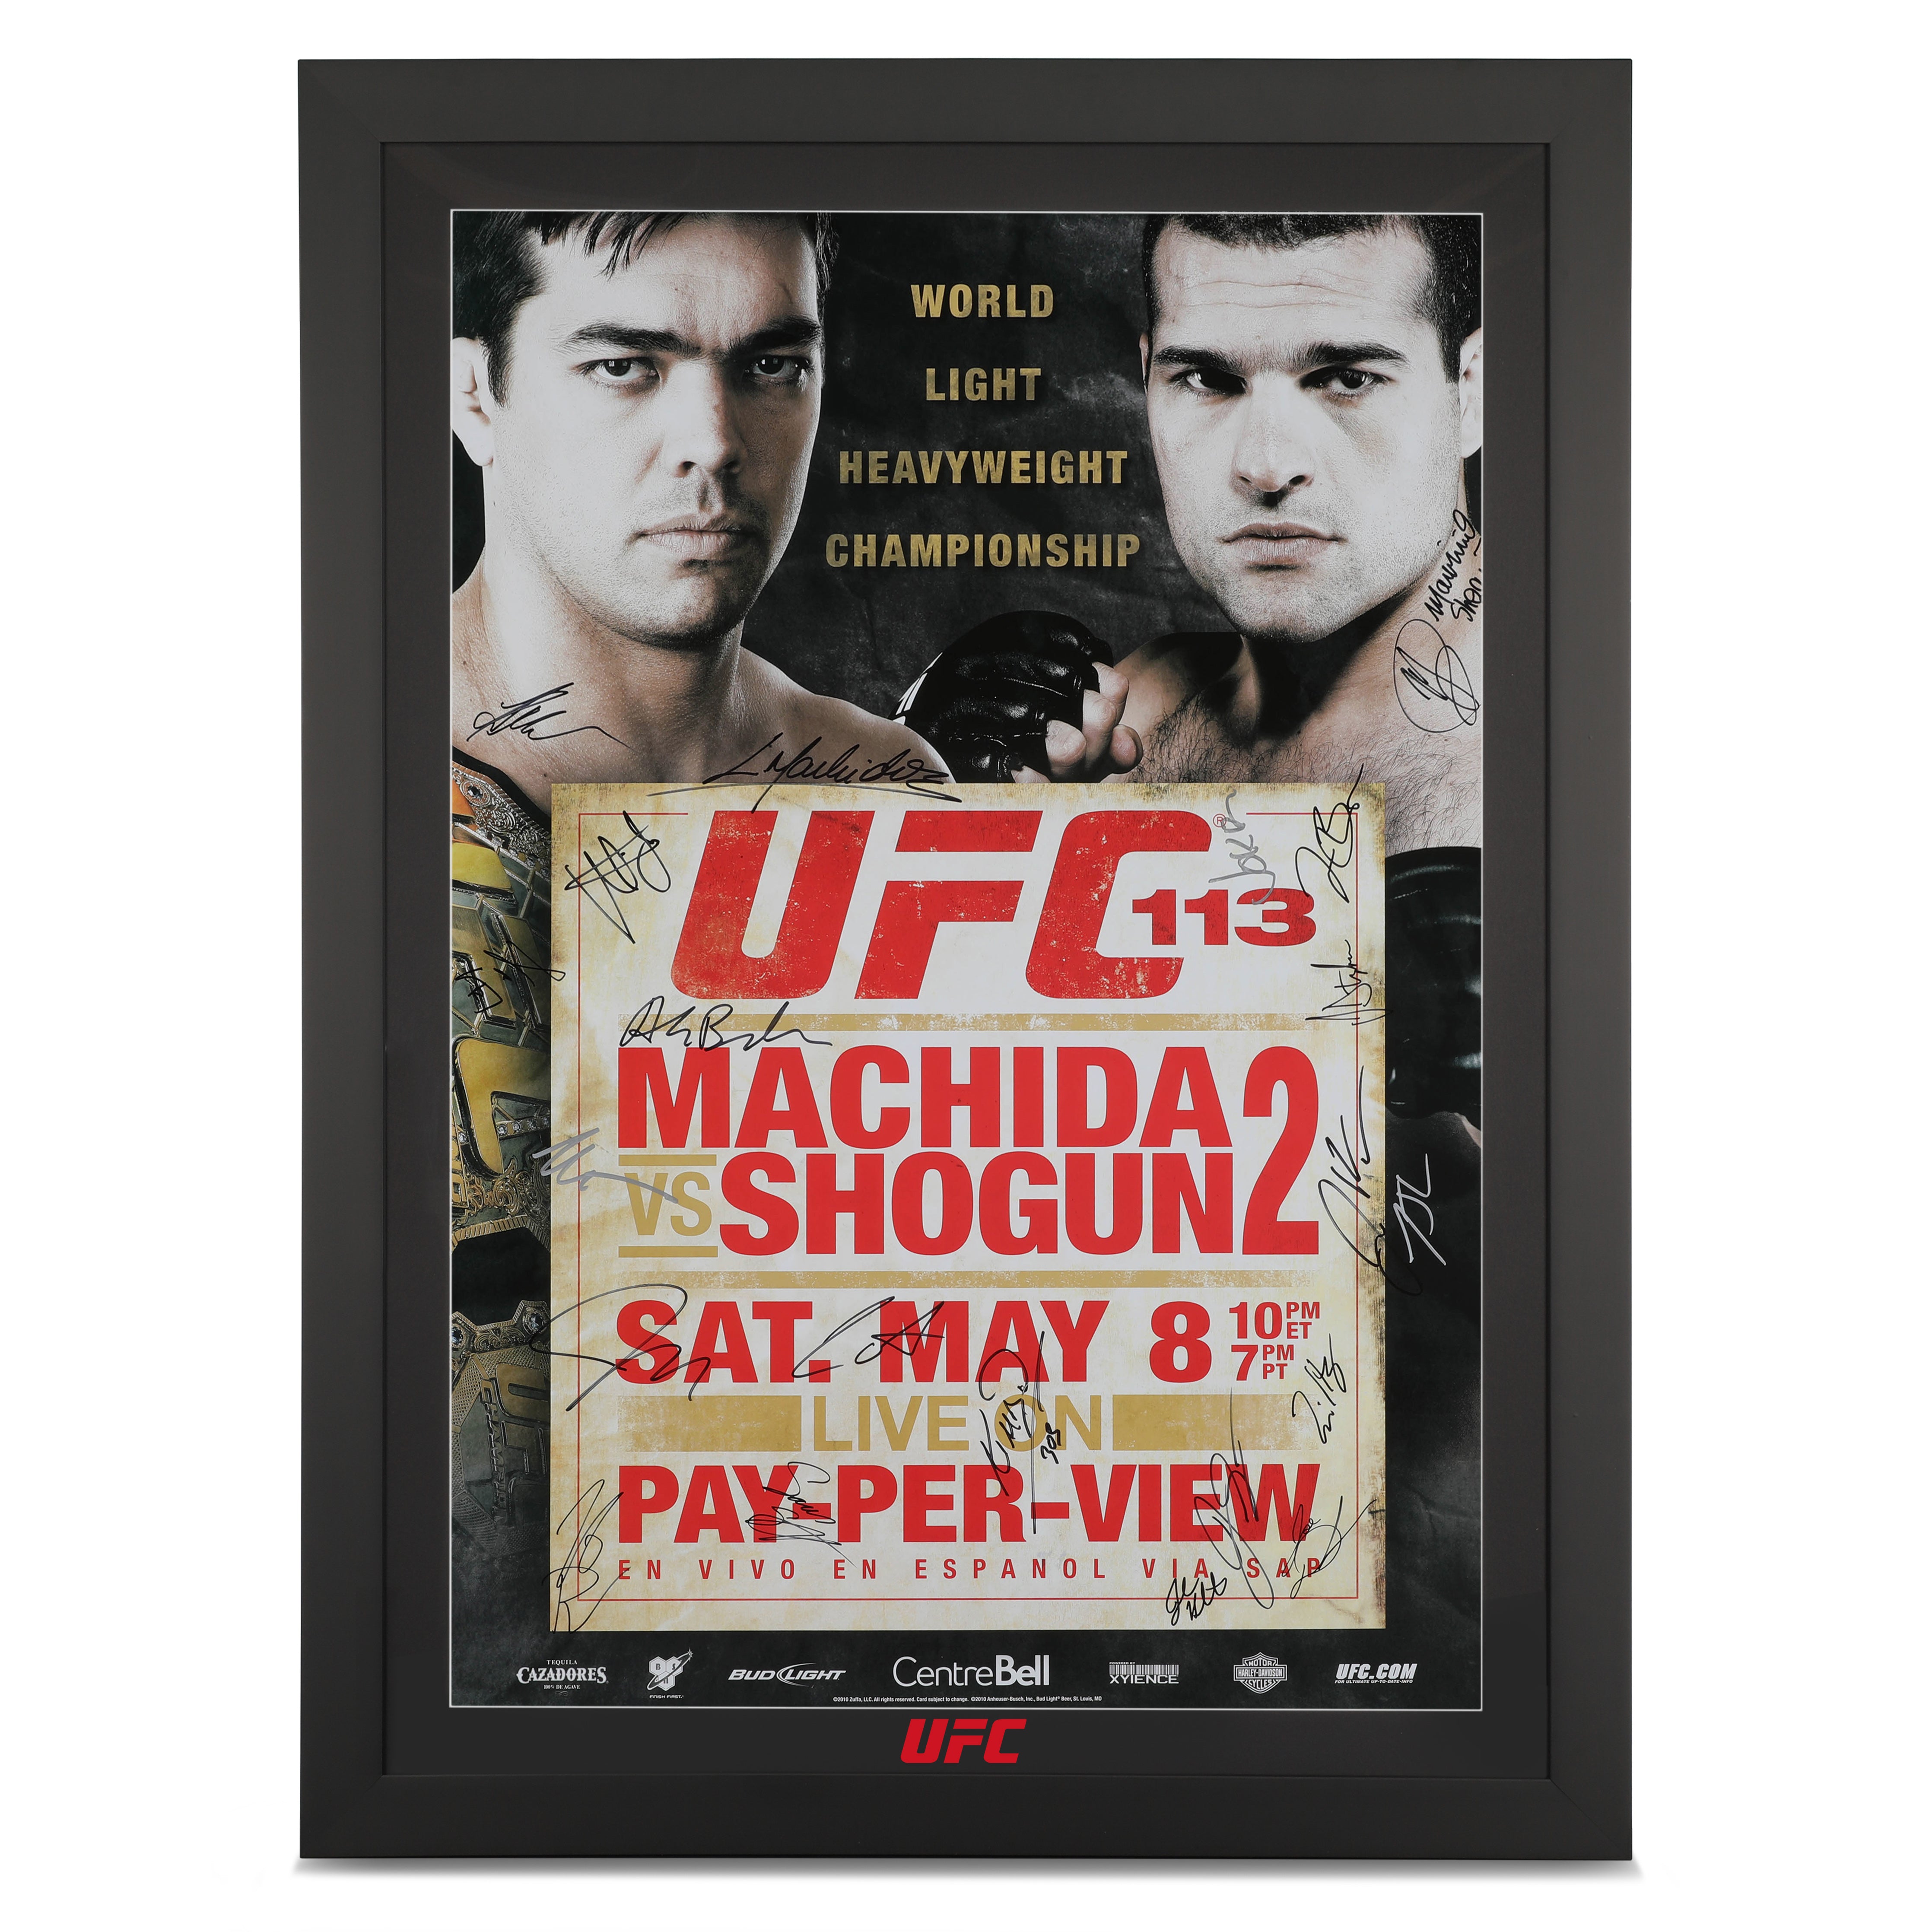 UFC 113: Machida vs. Shogun 2 Signed Event Poster